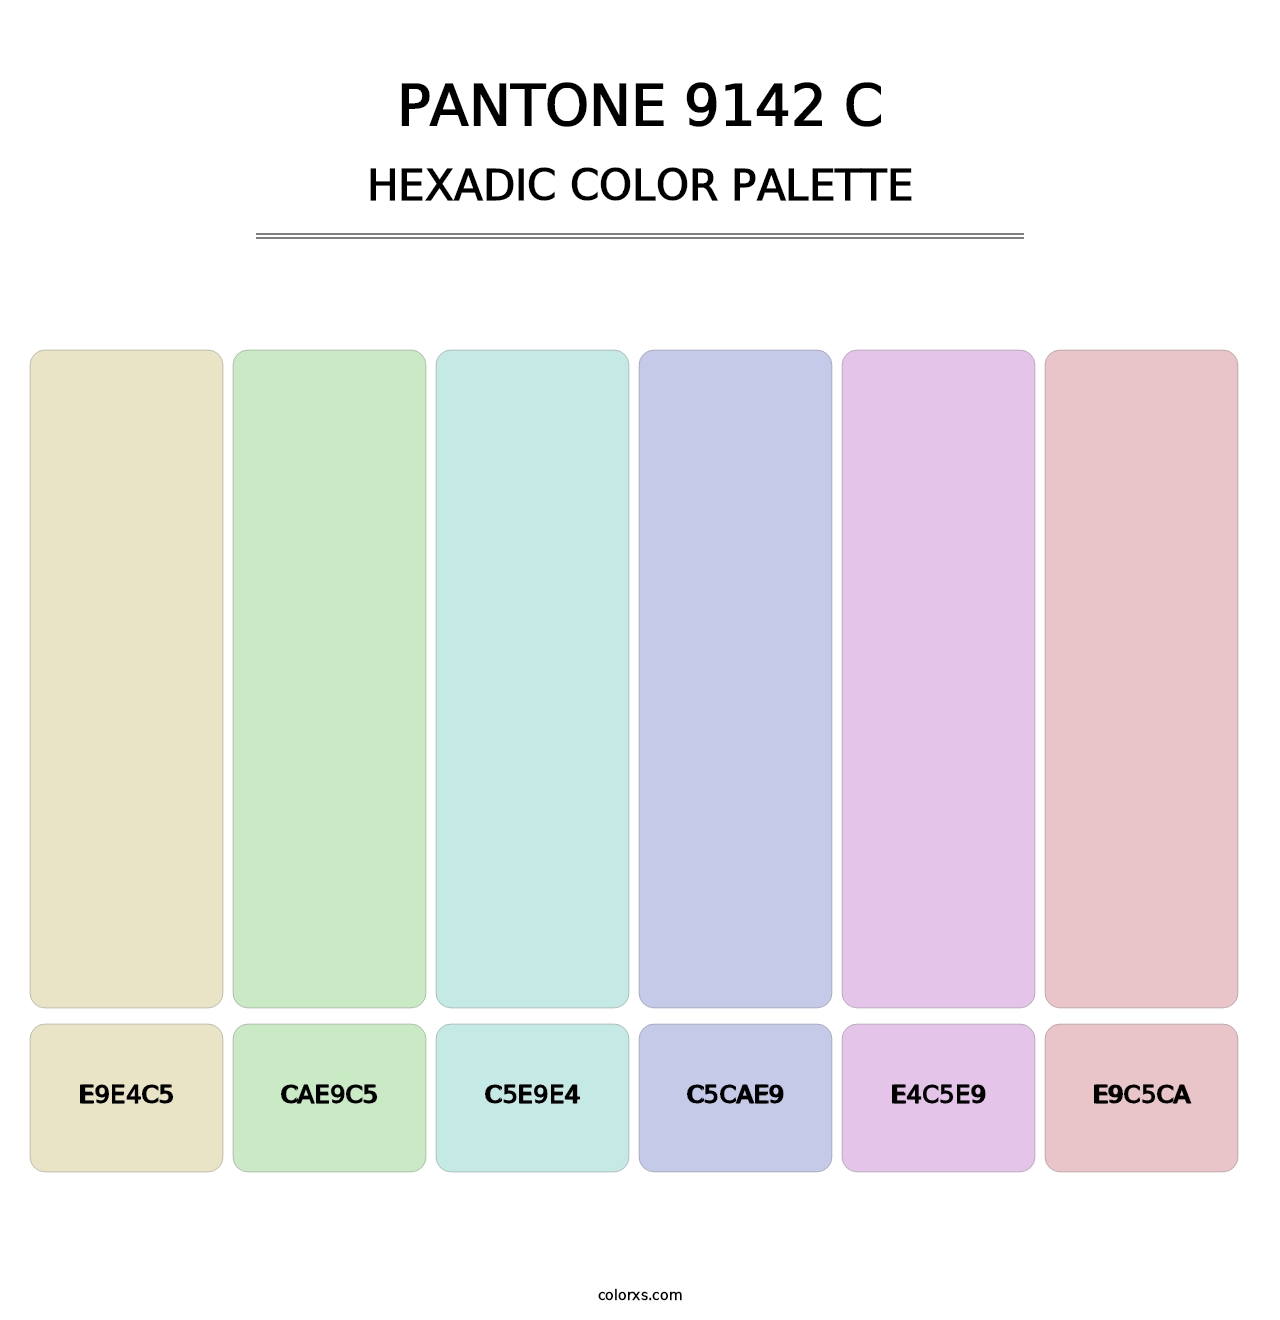 PANTONE 9142 C - Hexadic Color Palette